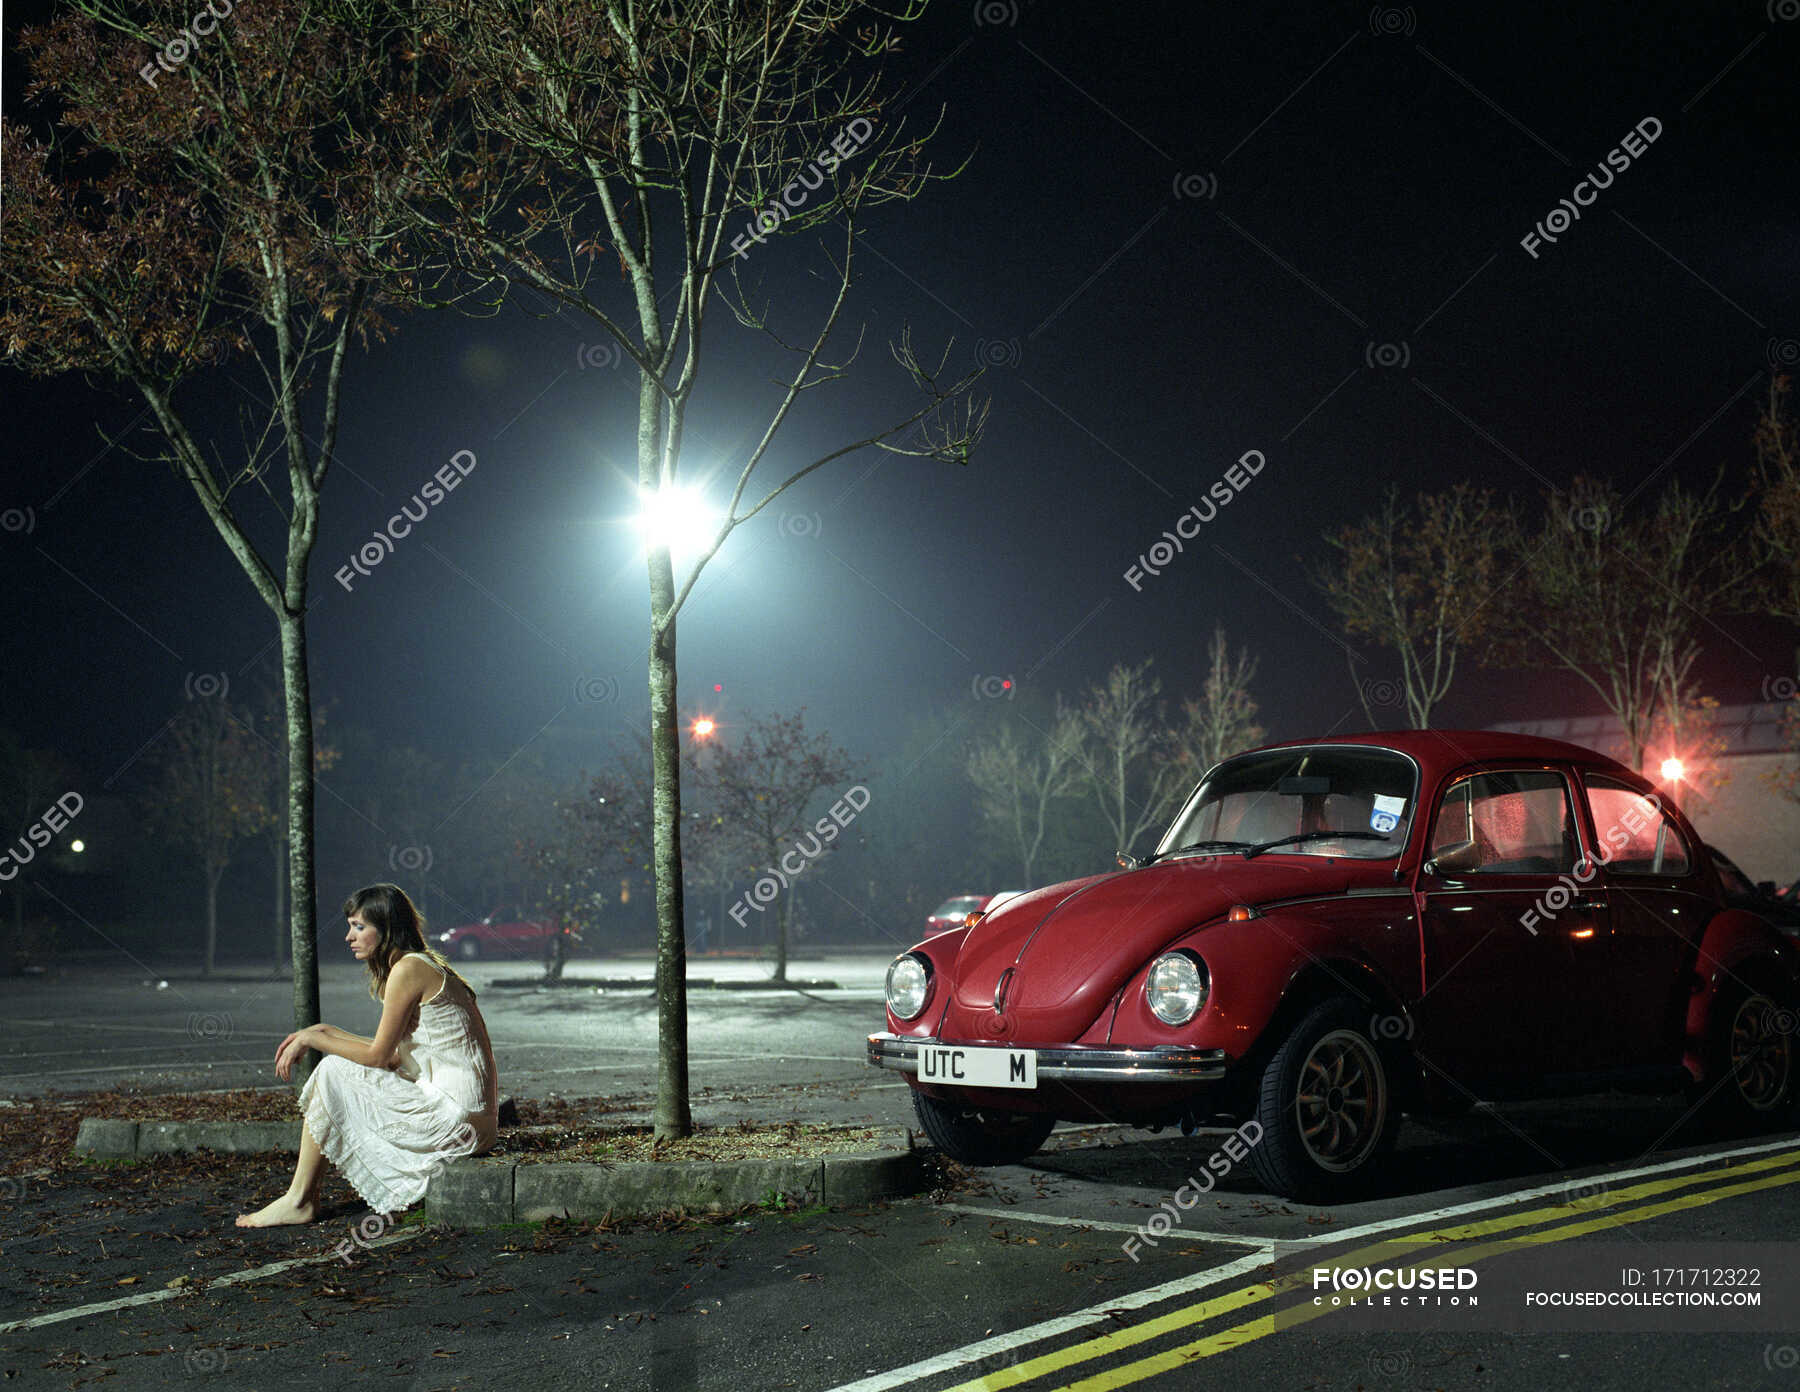 https://st.focusedcollection.com/13397678/i/1800/focused_171712322-stock-photo-woman-sitting-car-park-night.jpg